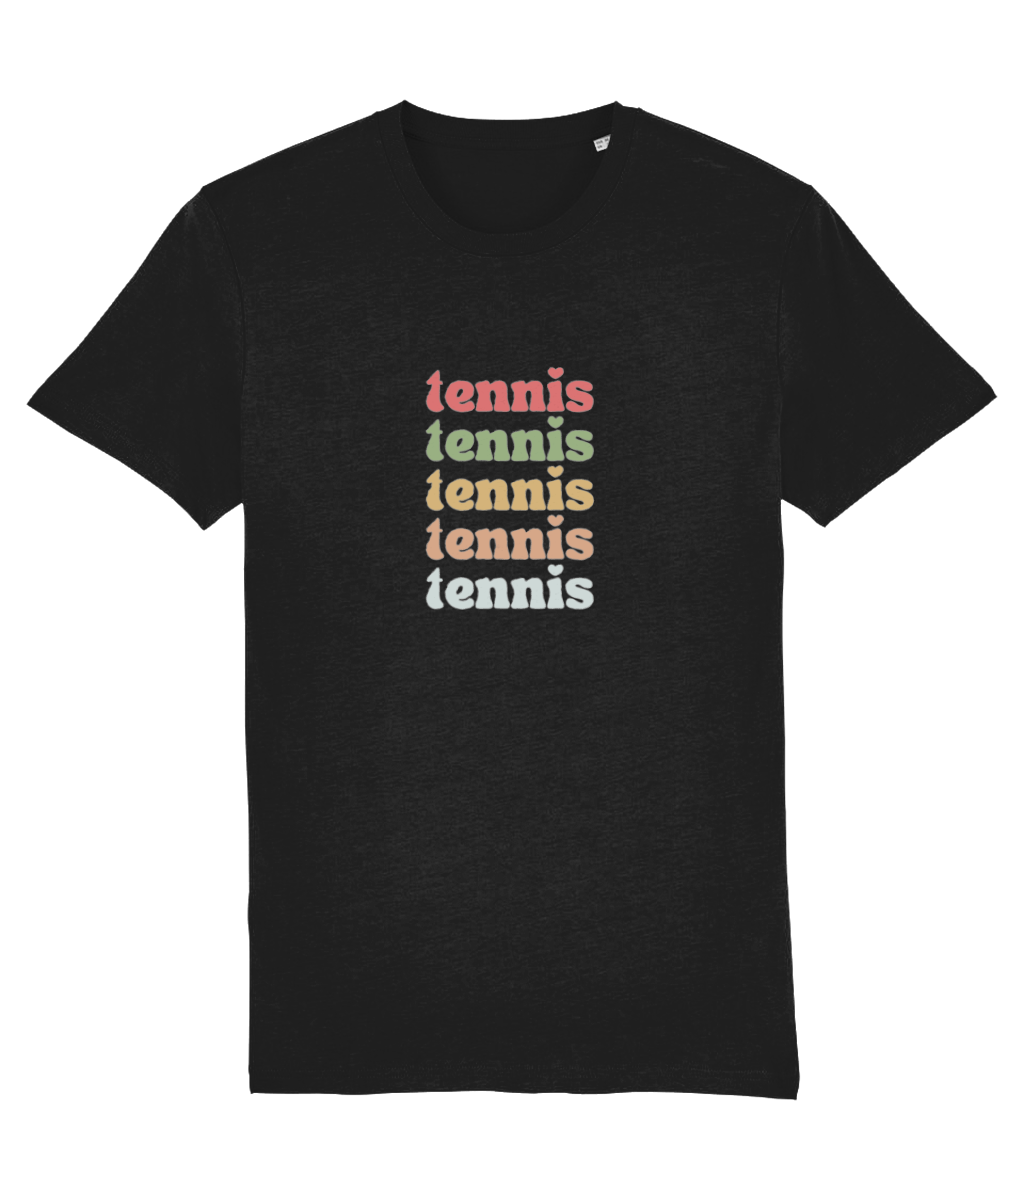 Retro Style Tennis T-Shirt